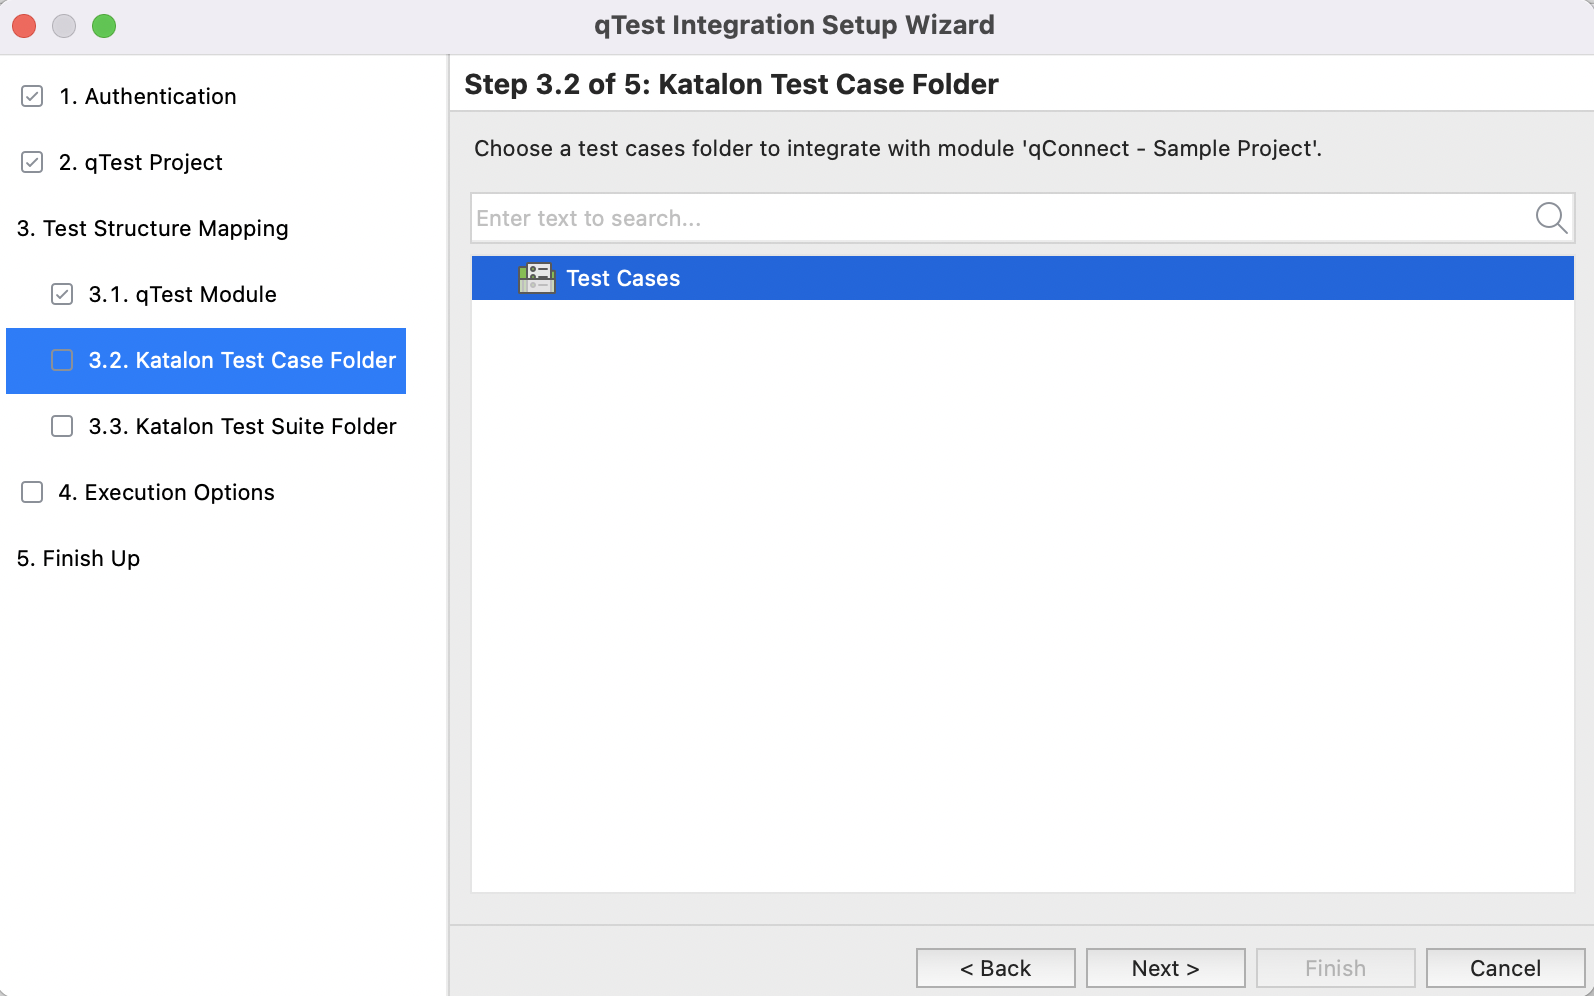 Select Katalon test case folder to map with qTest module